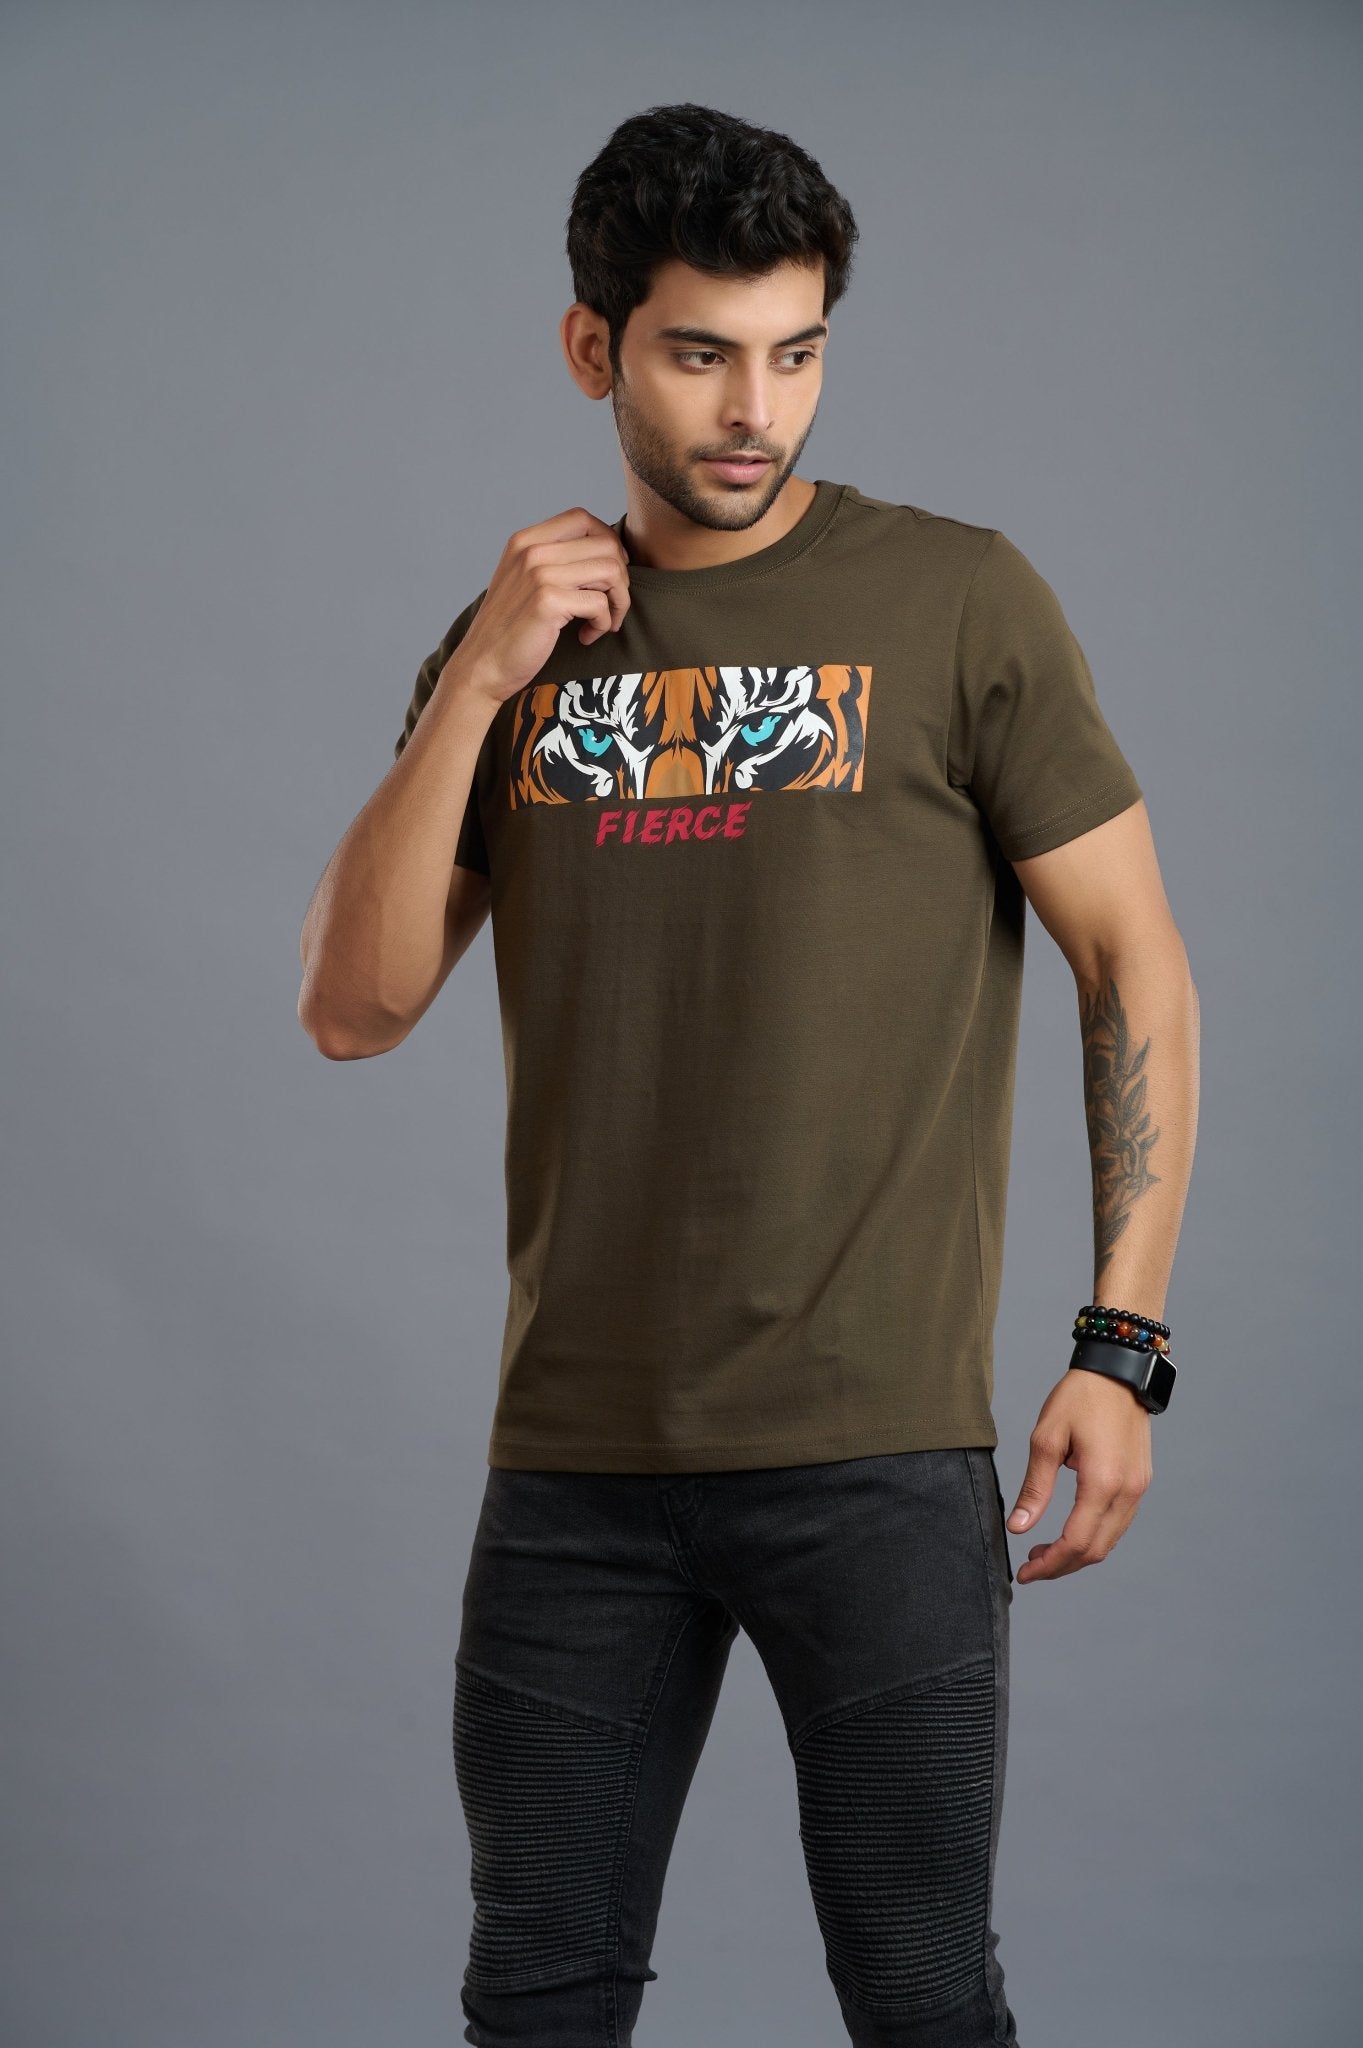 Tiger Fierce Printed T-Shirt for Men - Go Devil